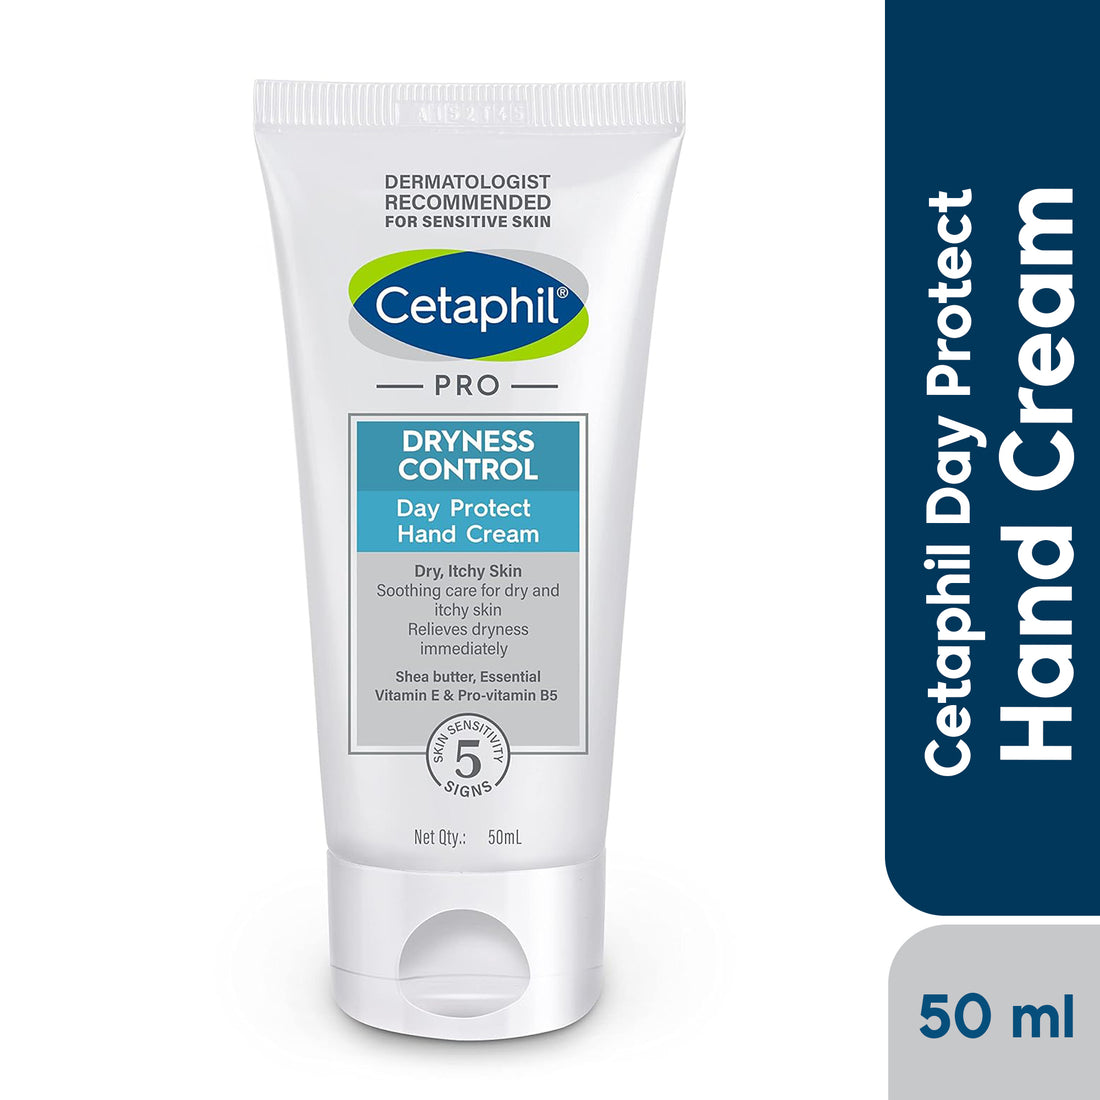 Cetaphil PRO Dryness Control Day Protect Hand Cream (50ml)